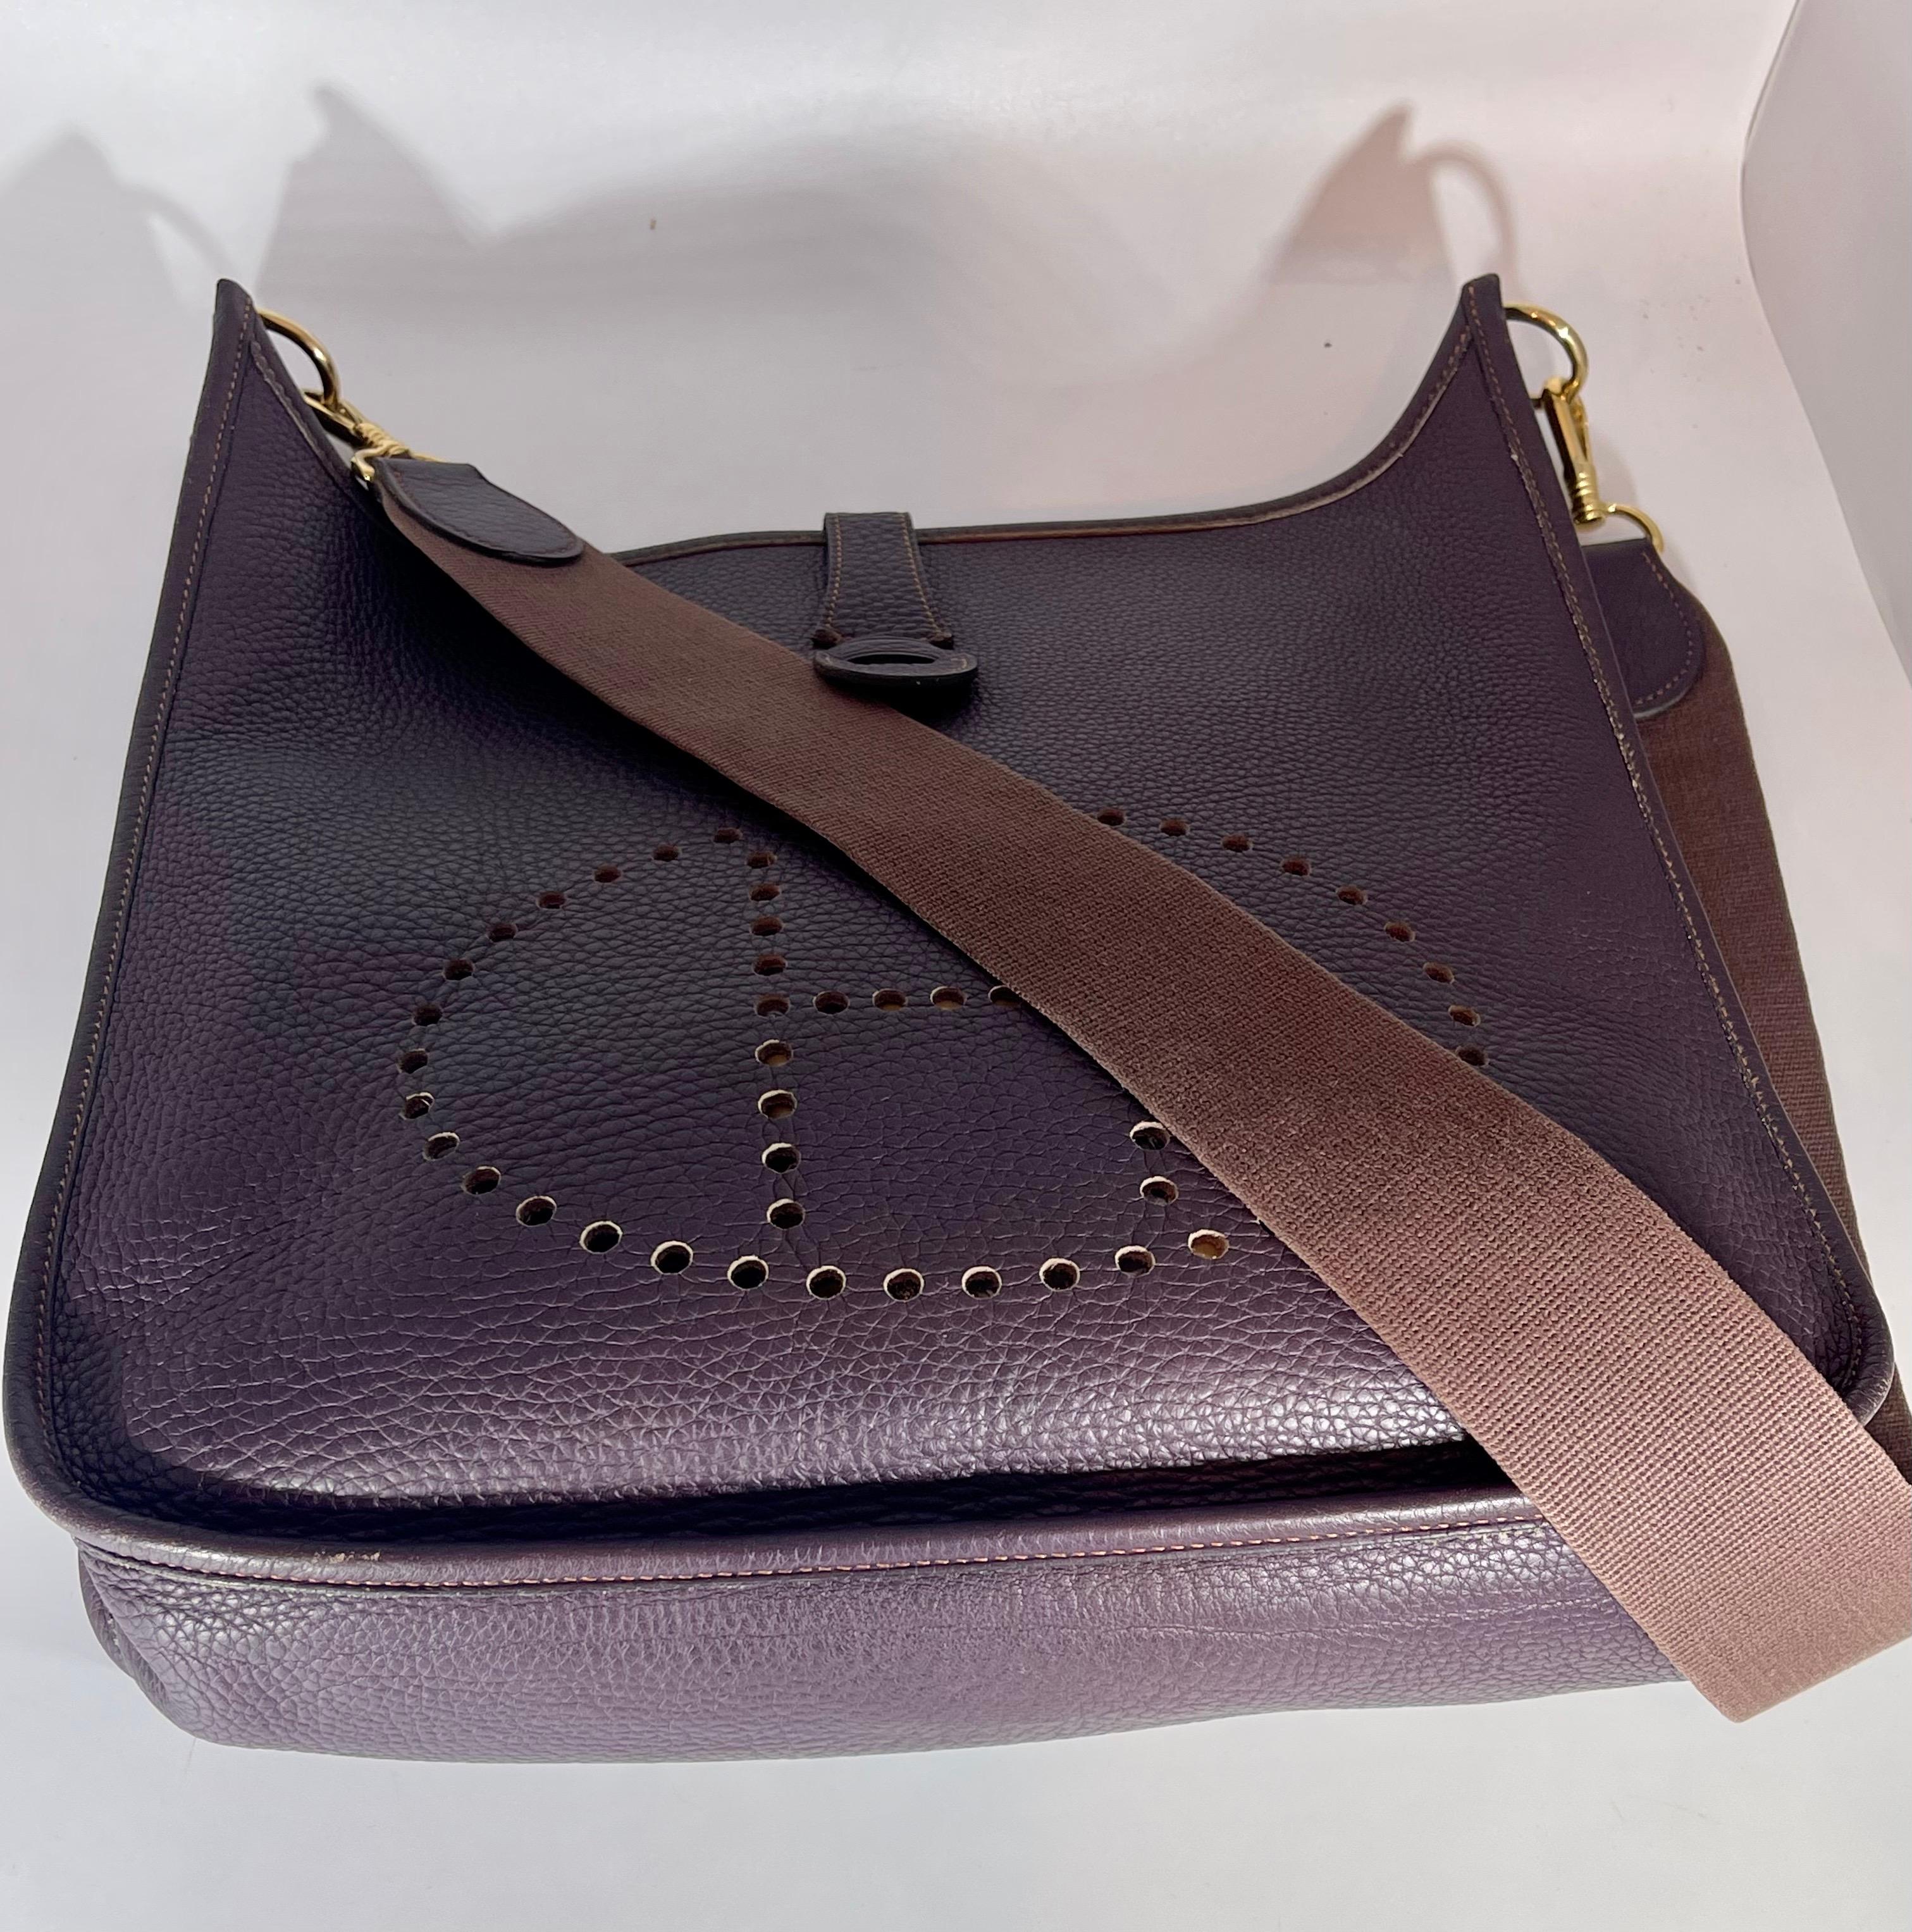 Hermès Evelyne Pm Dunkelbraun / Schokolade Leder Cross Body Bag wie neu im Angebot 1